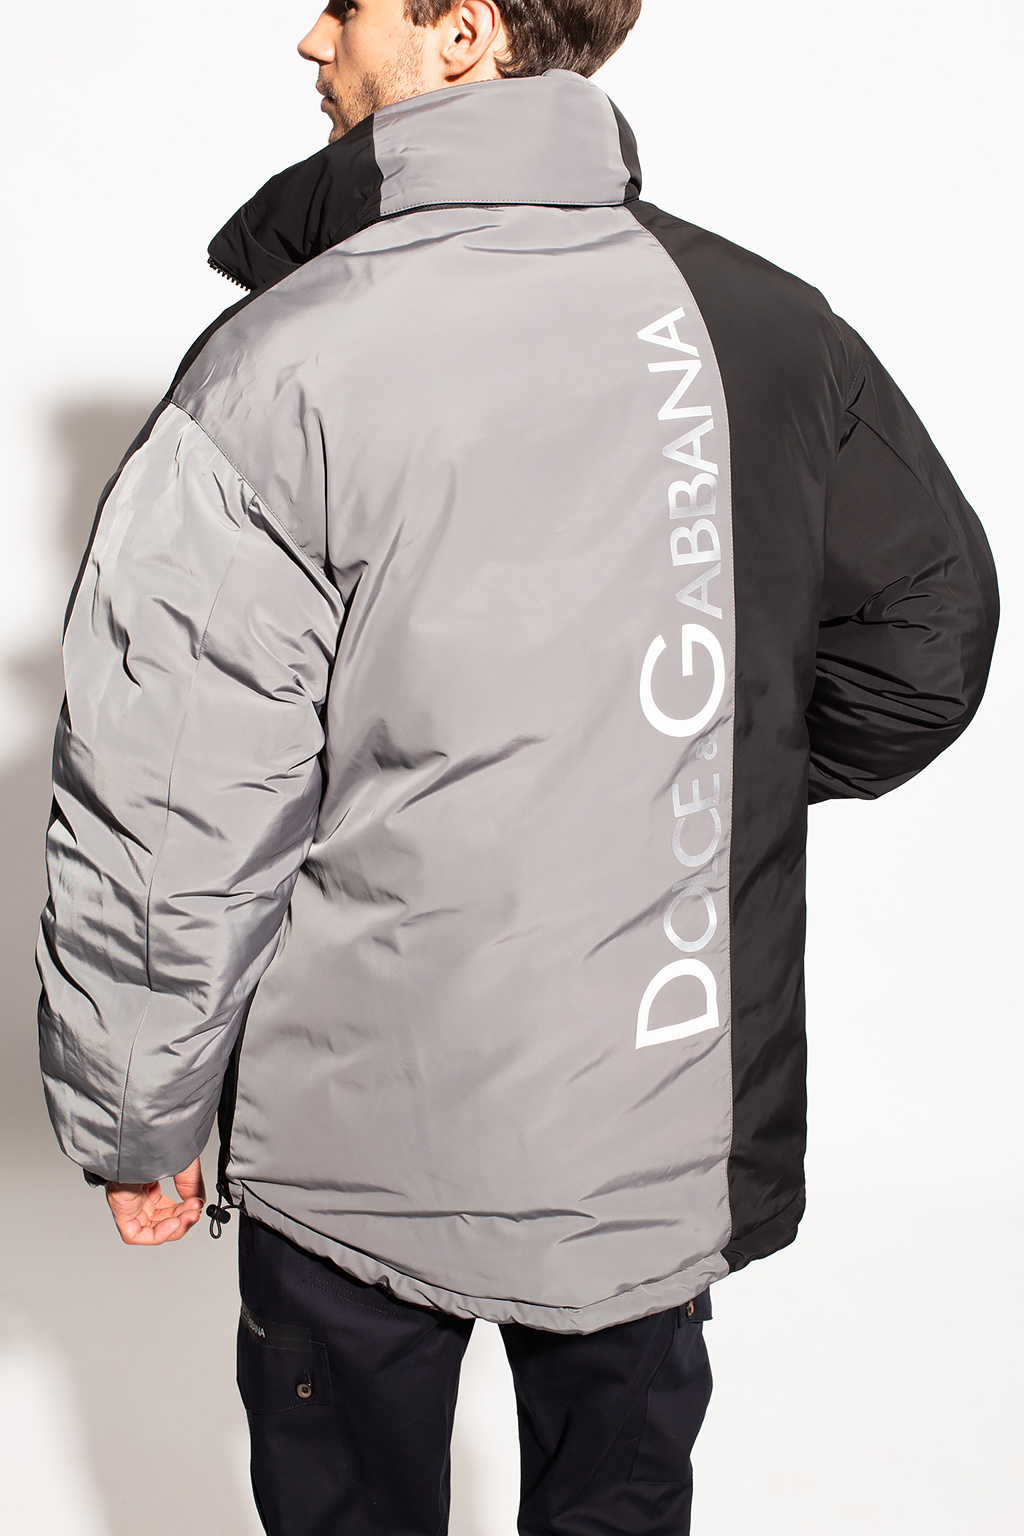 Dolce & Gabbana Reversible jacket